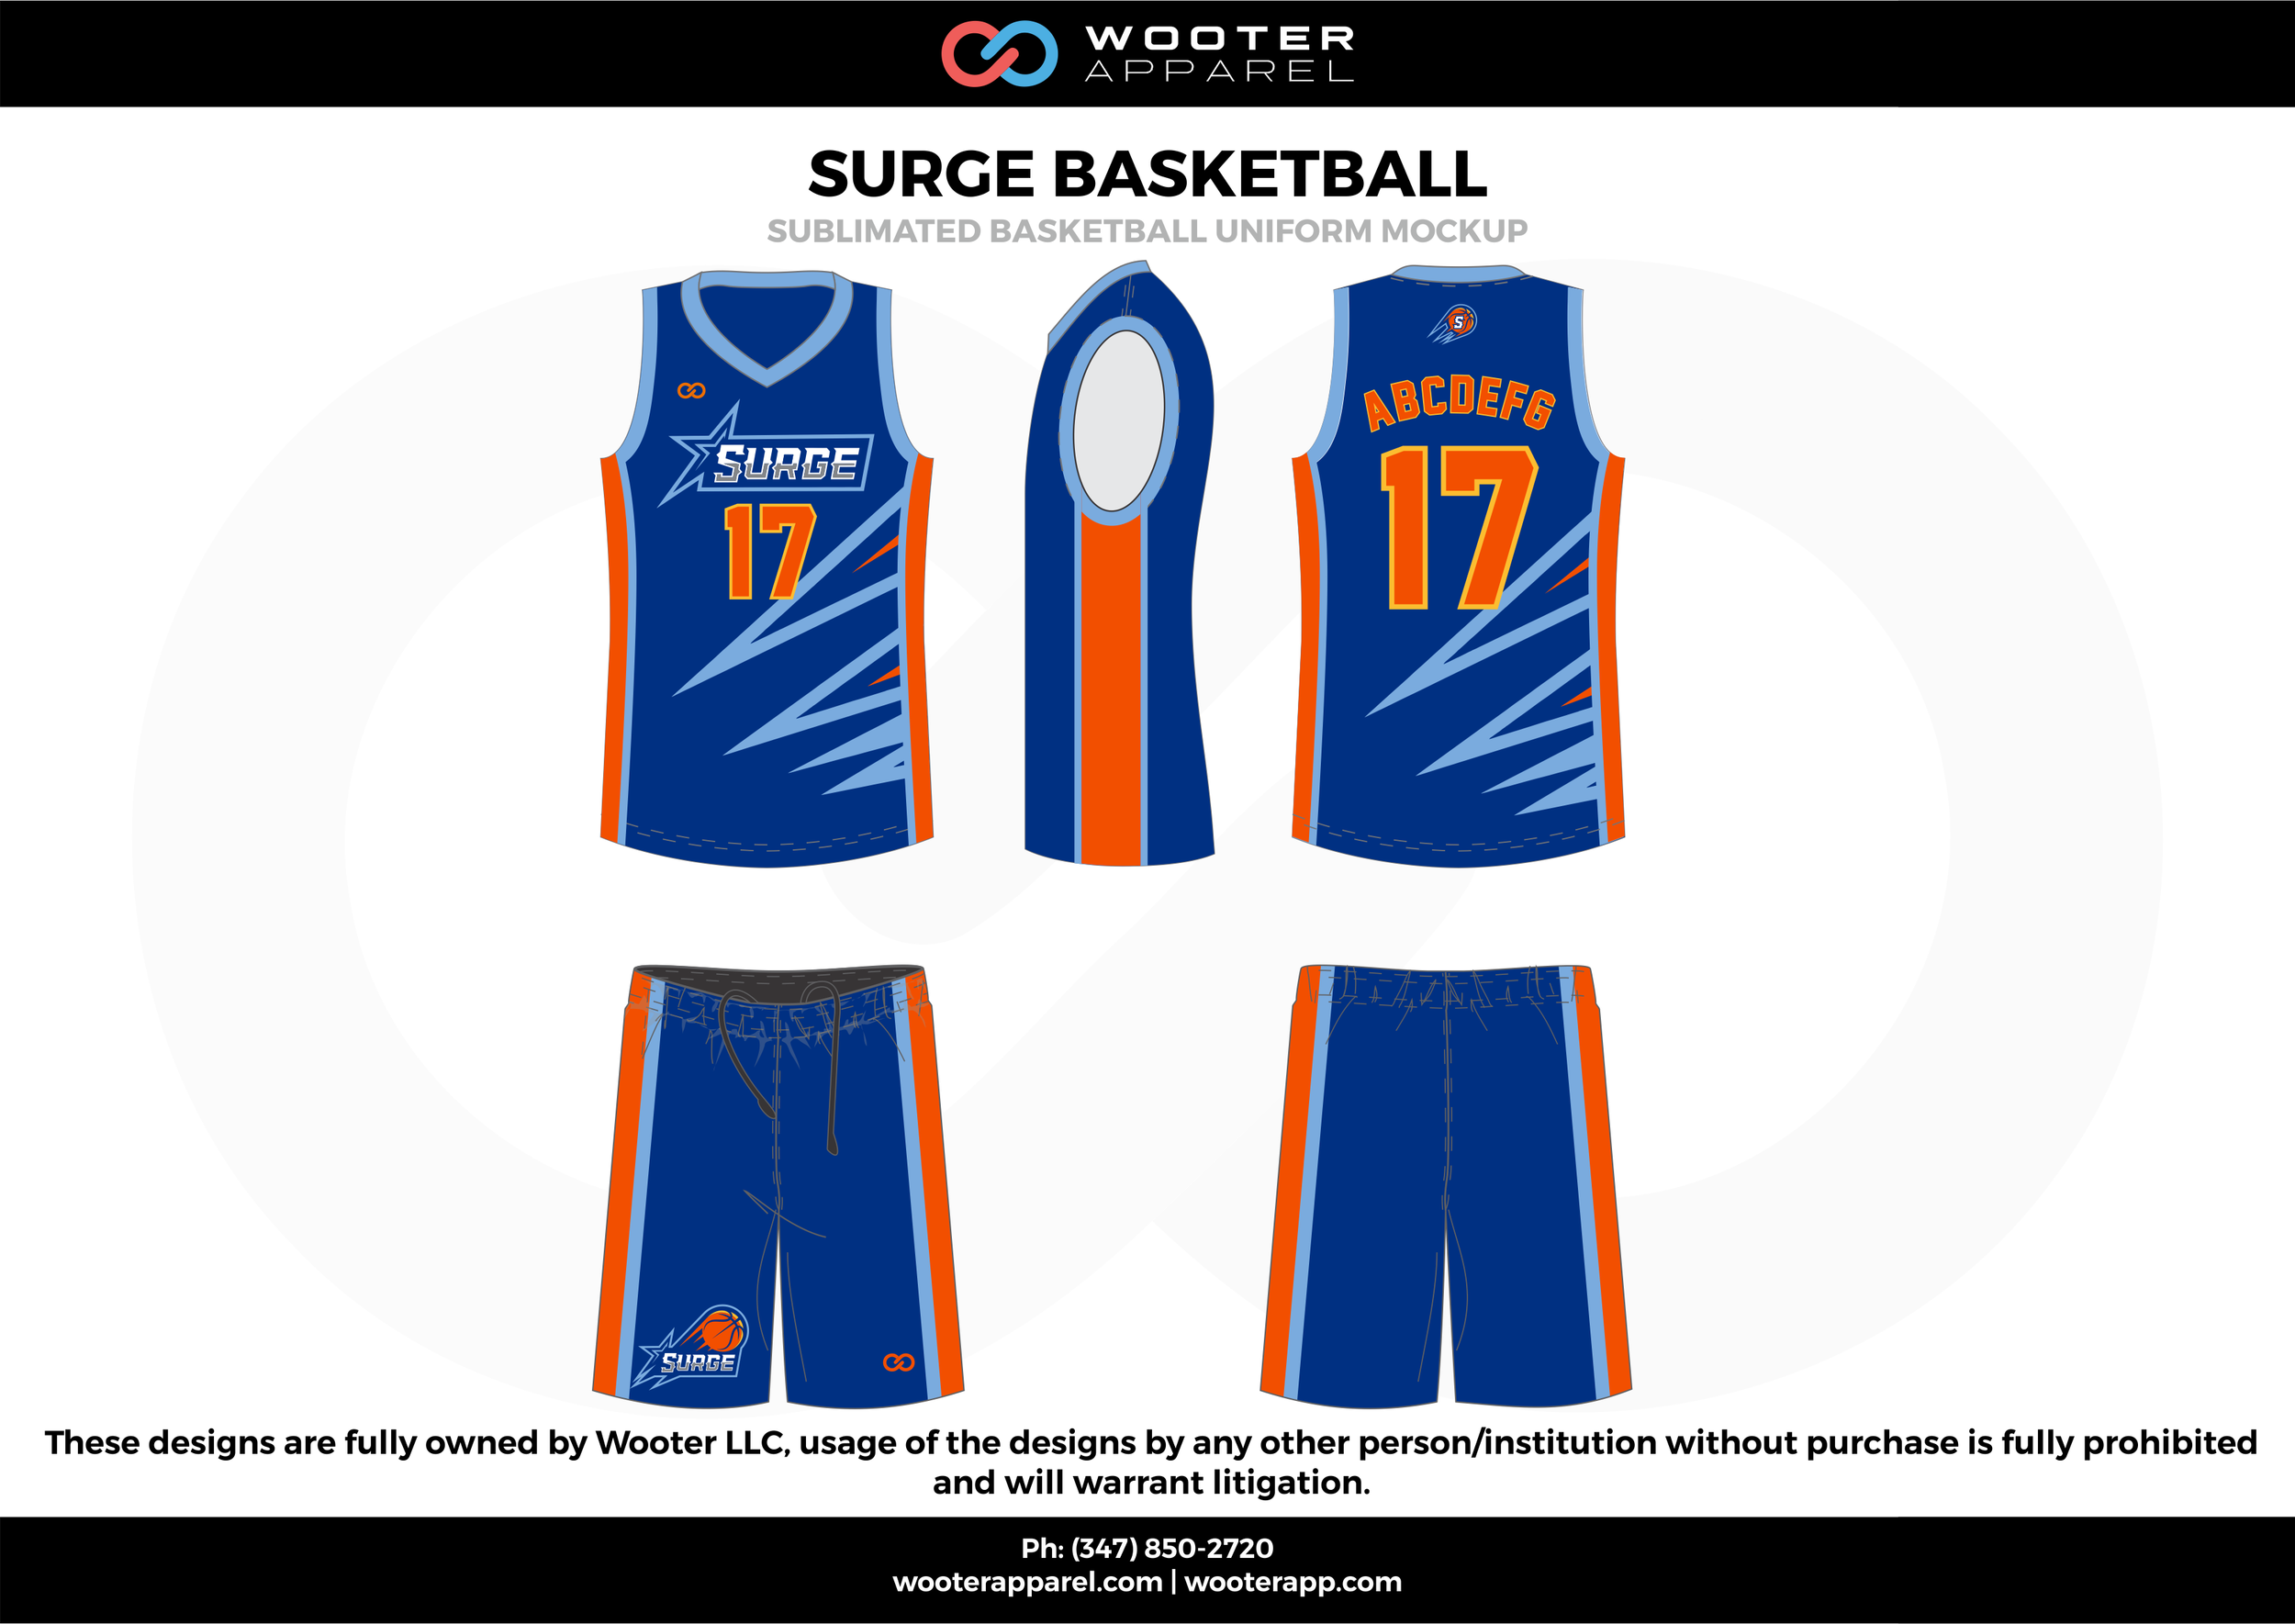 blue sublimation basketball jersey